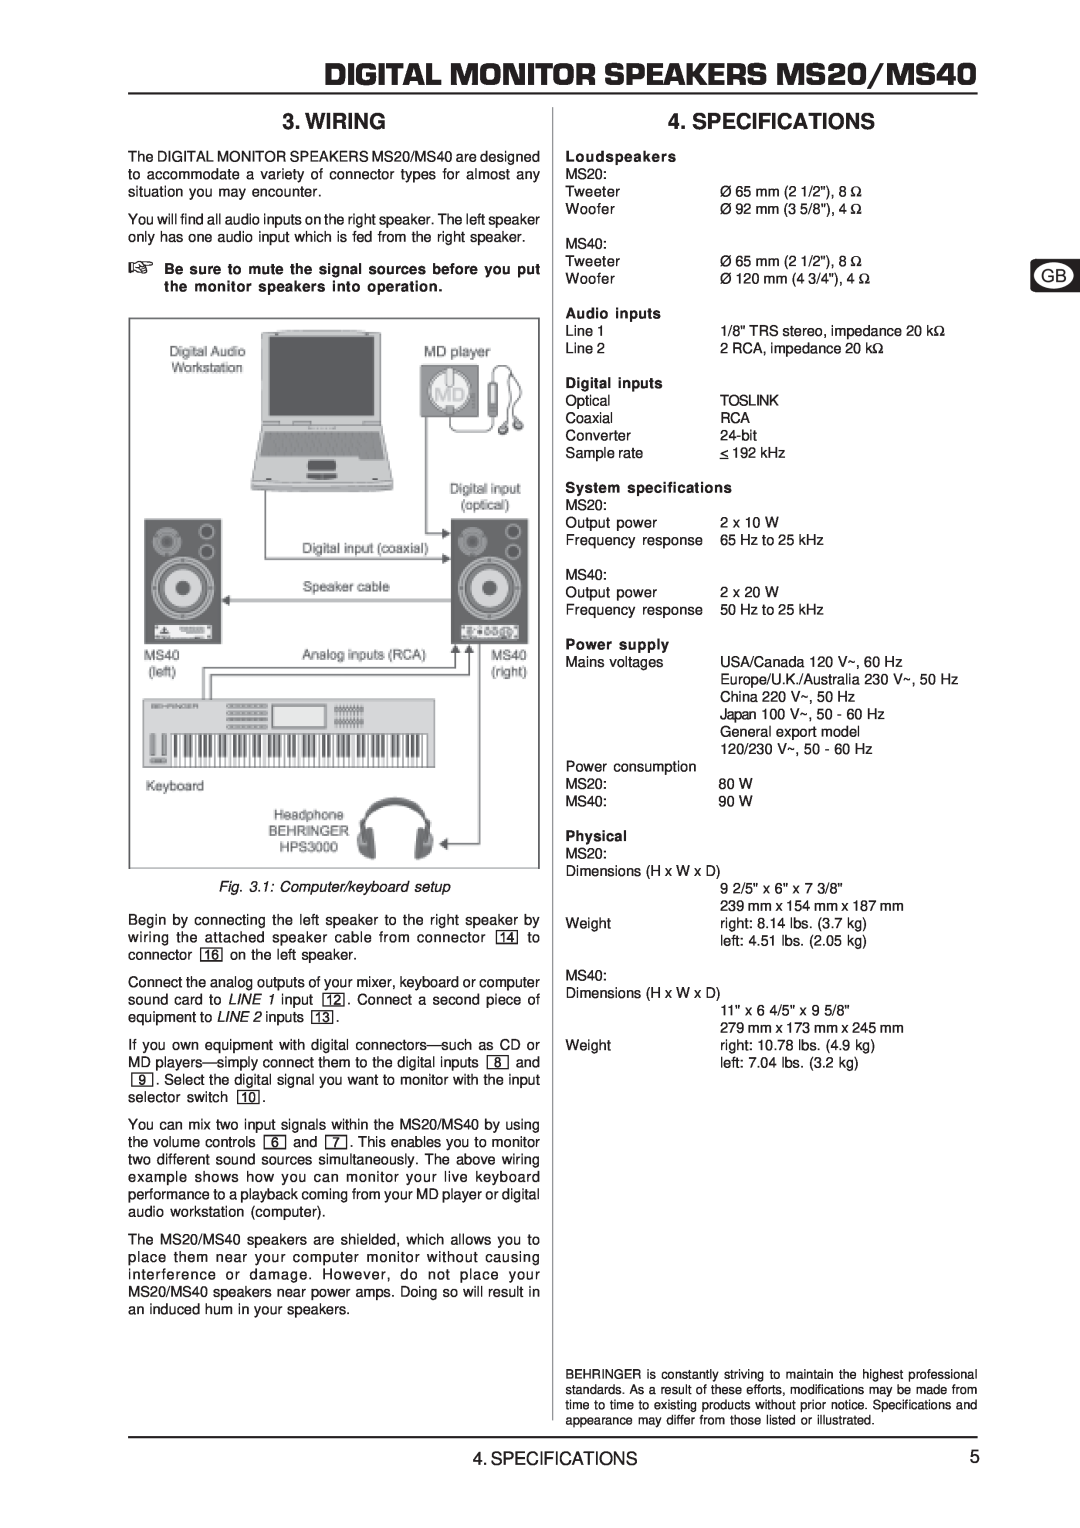 Behringer user manual Wiring, Specifications, 1 Computer/keyboard setup, DIGITAL MONITOR SPEAKERS MS20/MS40 